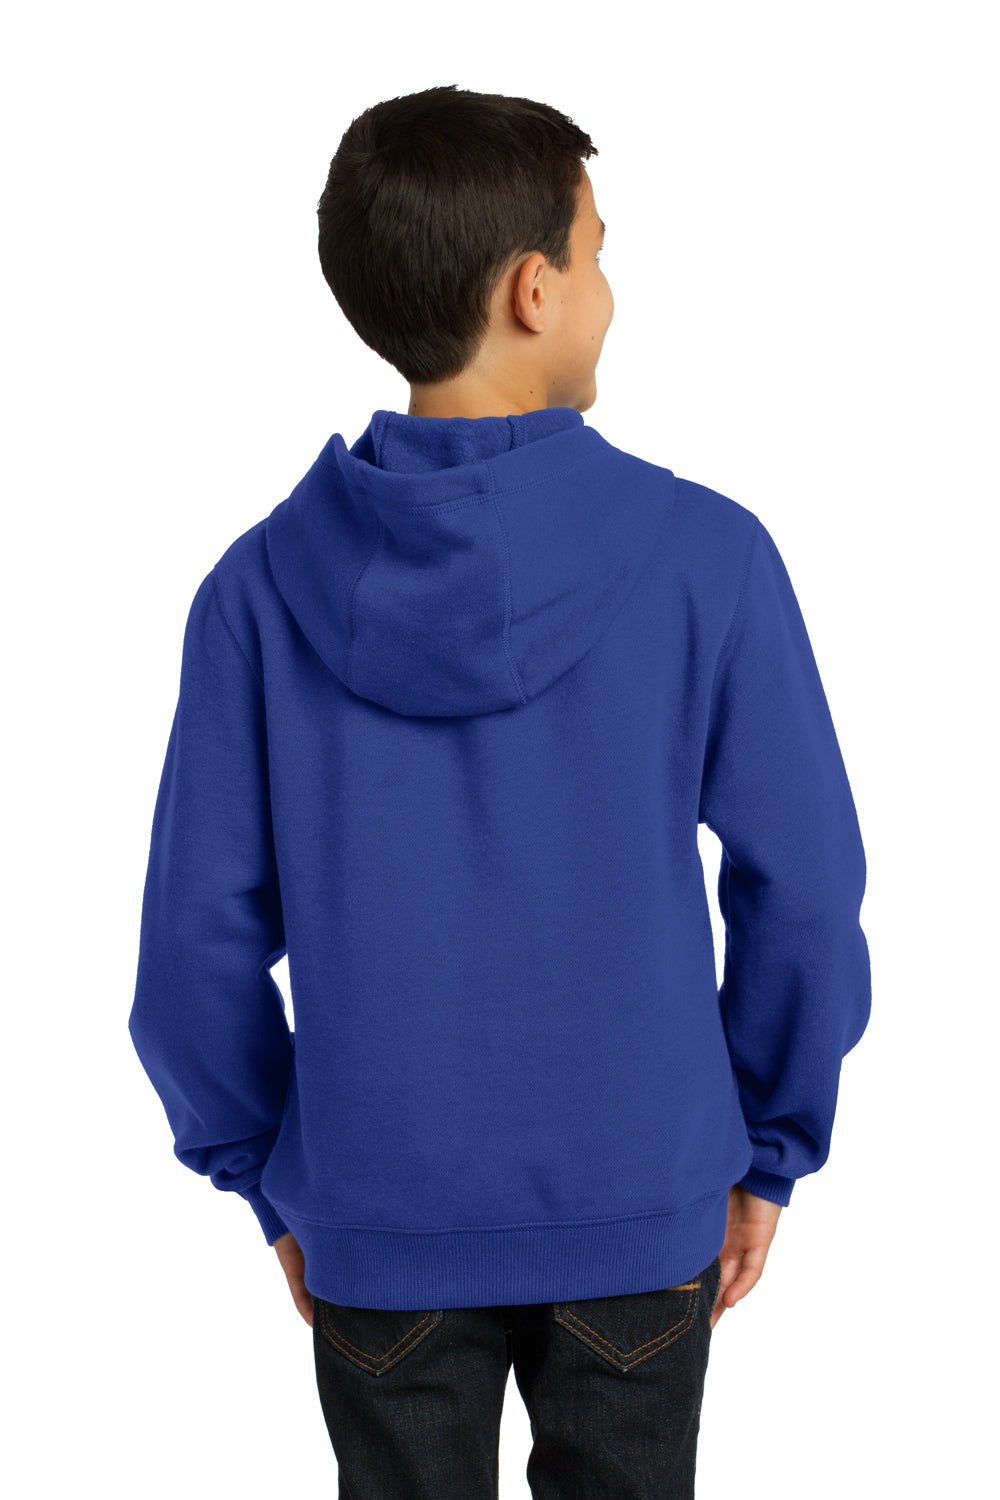 Sport-Tek YST254 Youth Fleece Hooded Sweatshirt Hoodie Royal Blue Back